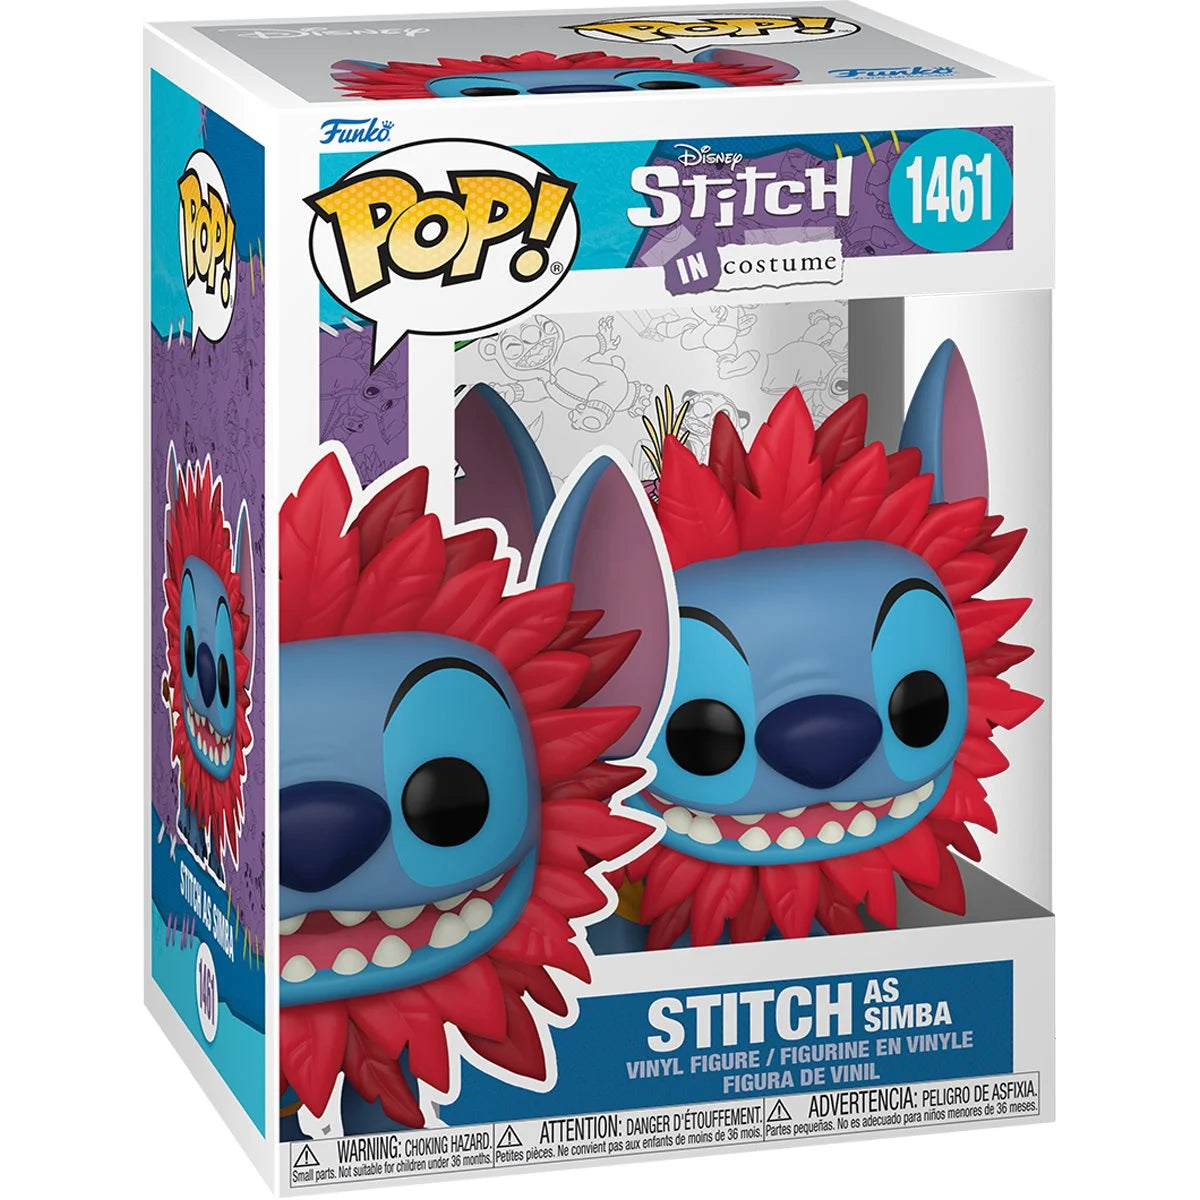 Funko Pop! Disney Lilo & Stitch Costume Stitch as Simba Vinyl Figure #1461